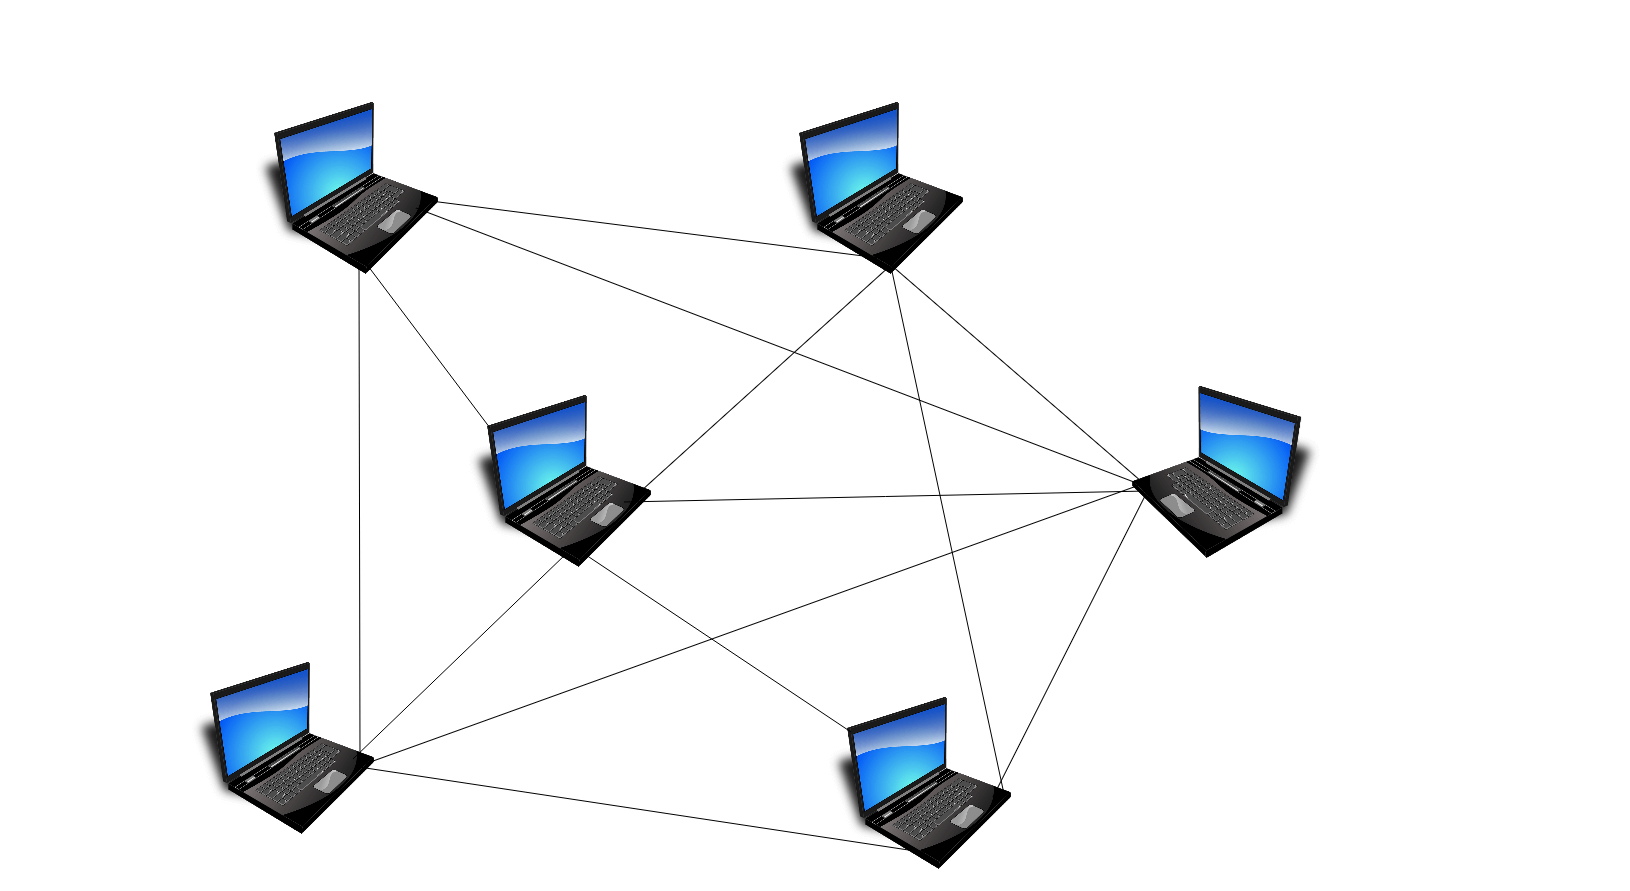 Peer-to-peer network architecture